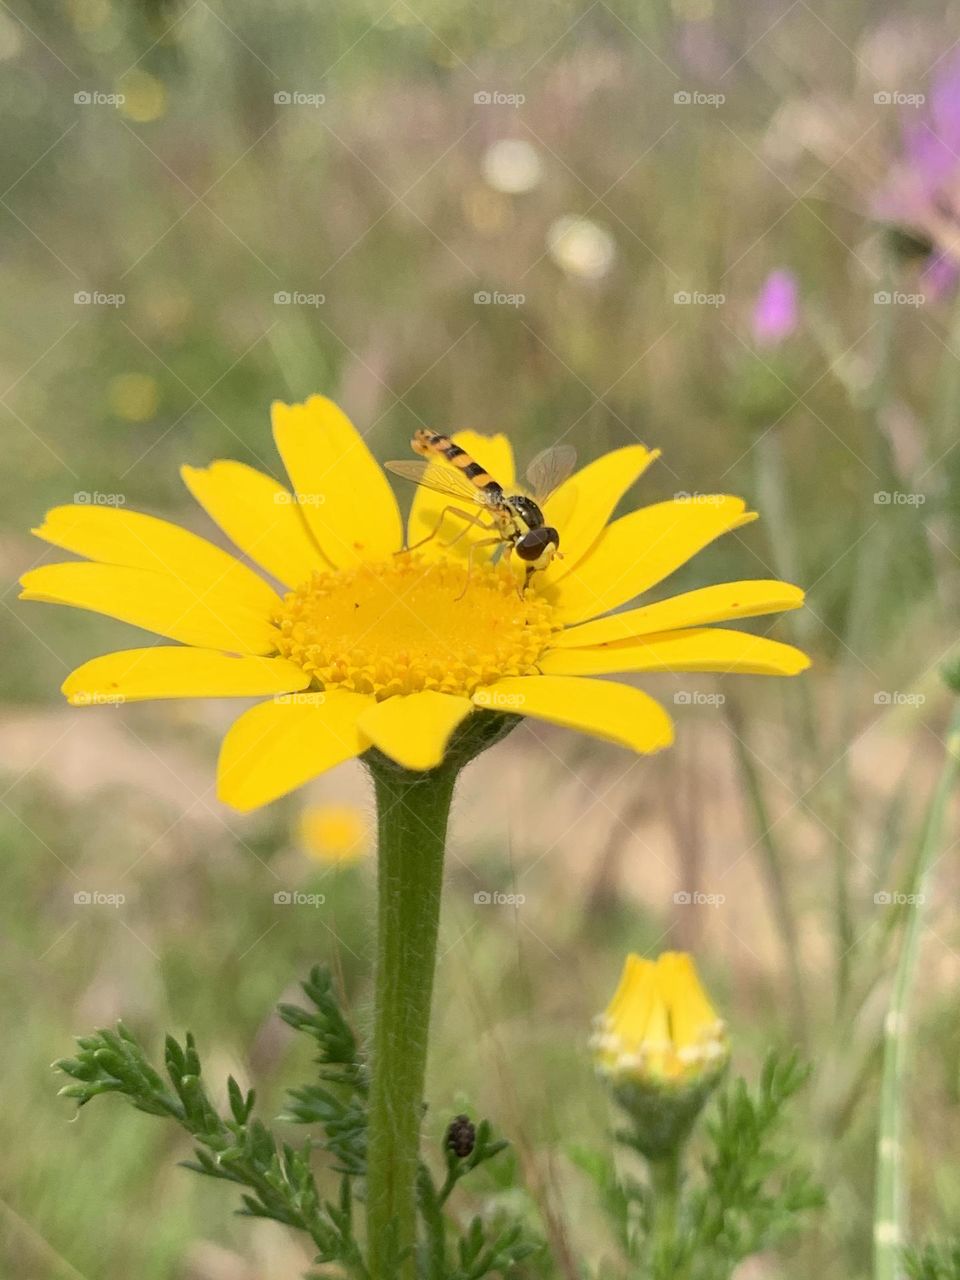 Bug on a flower